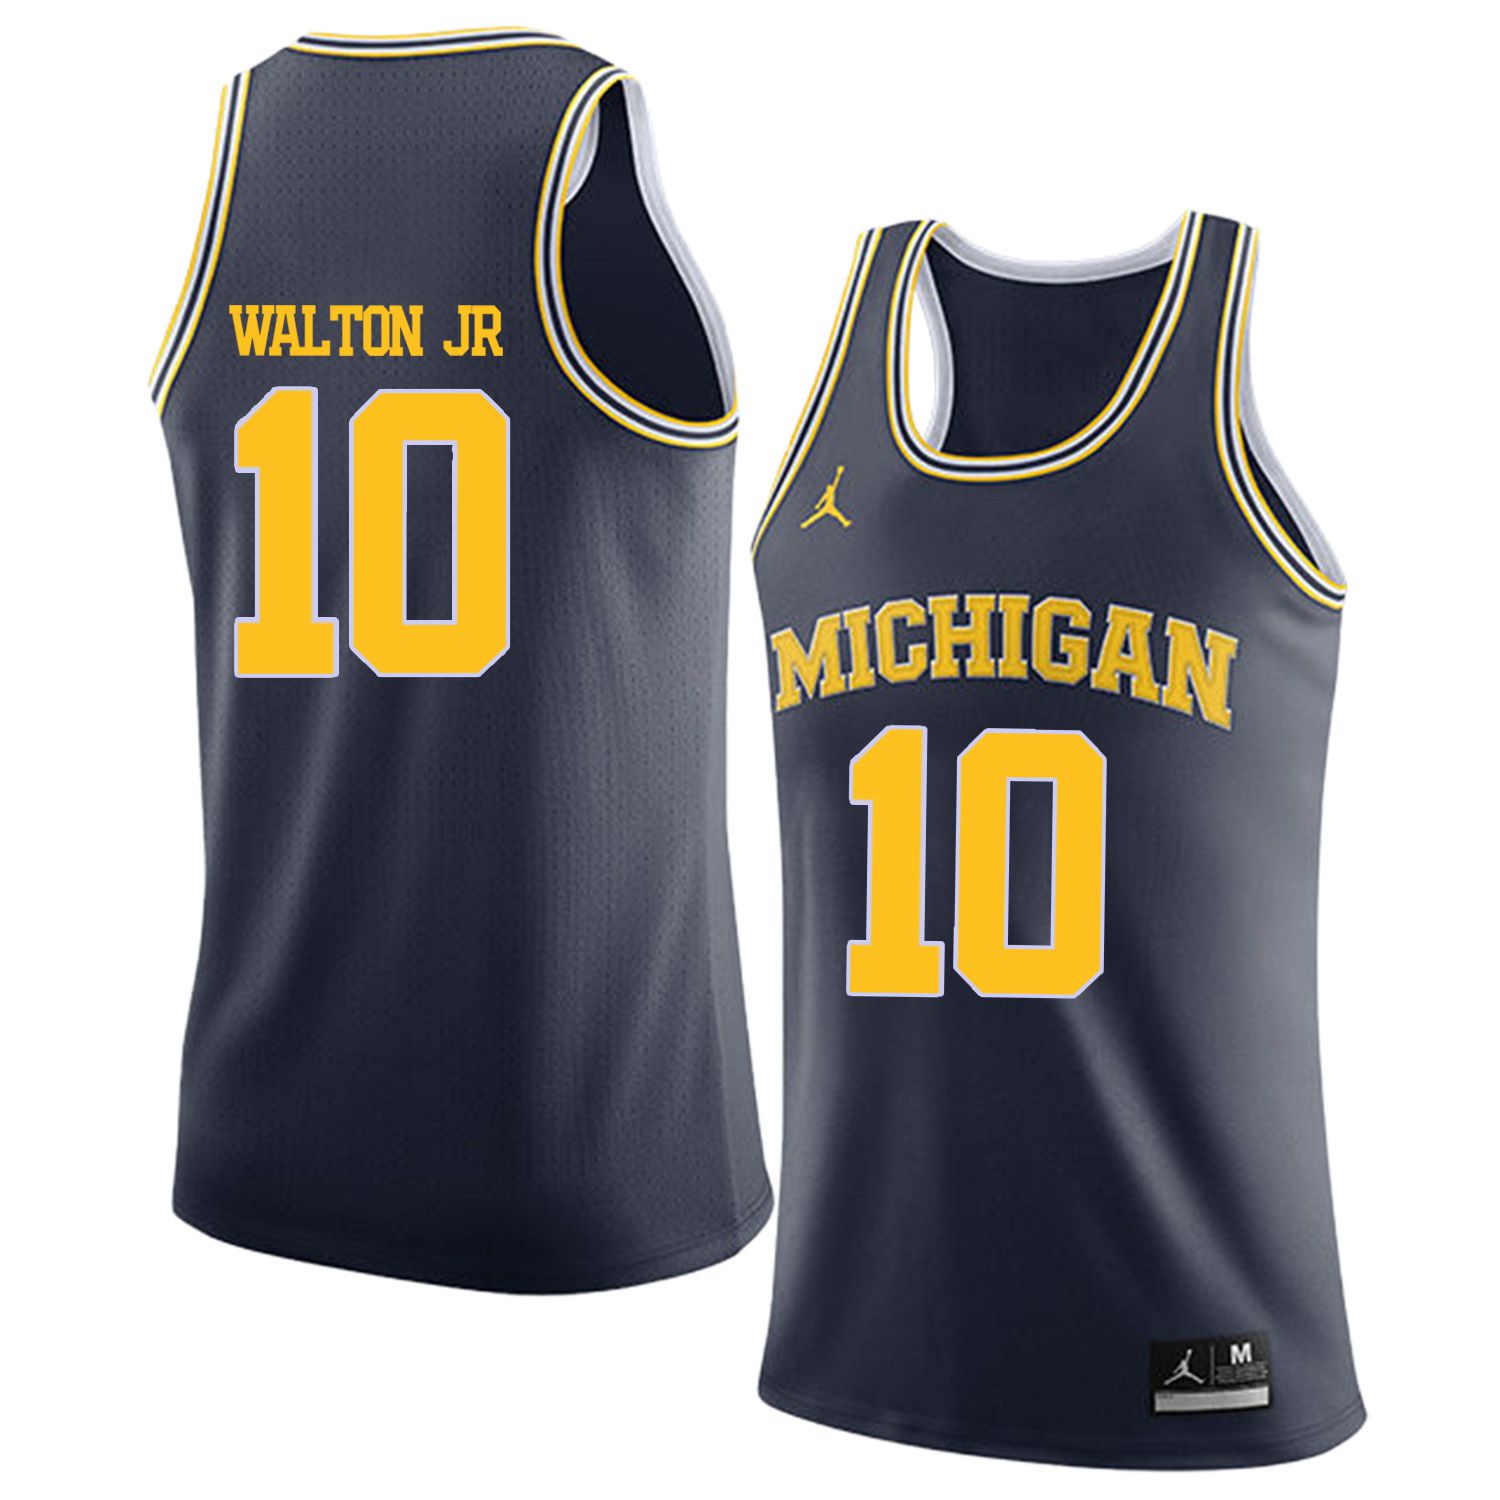 Men Jordan University of Michigan Basketball Navy 10 walton jr Customized NCAA Jerseys